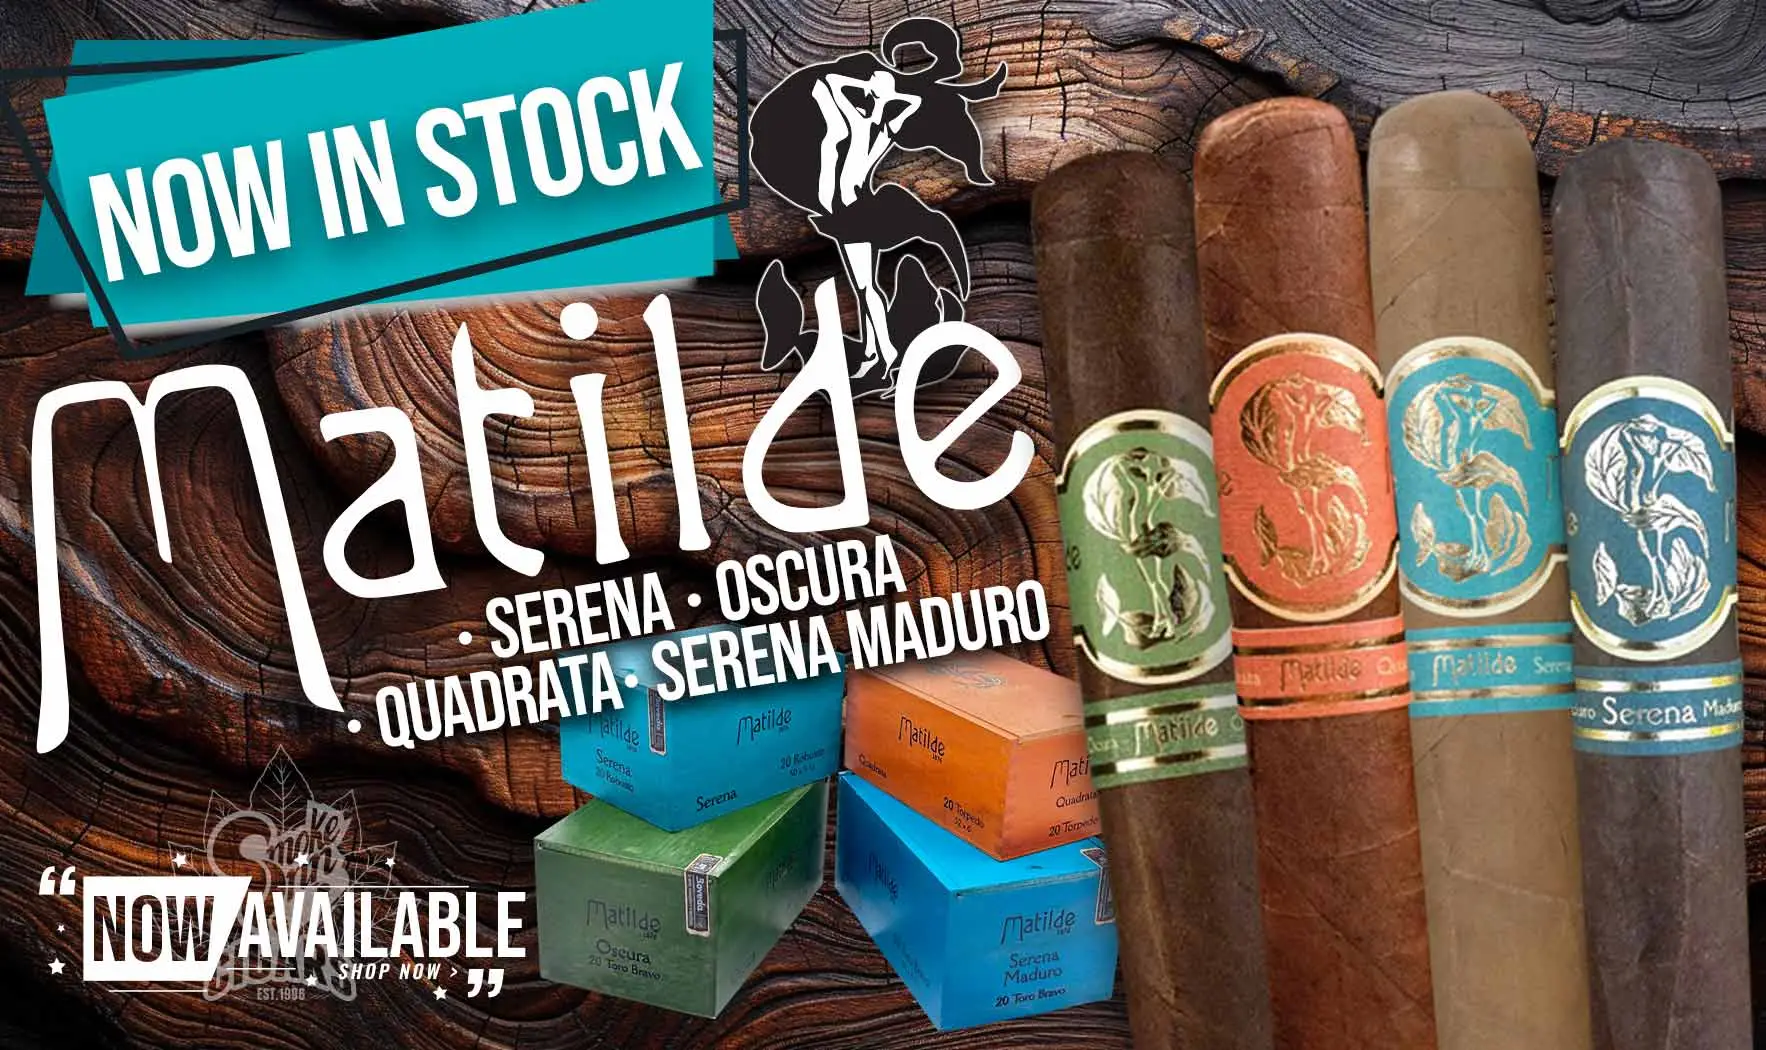 Matilde Cigars